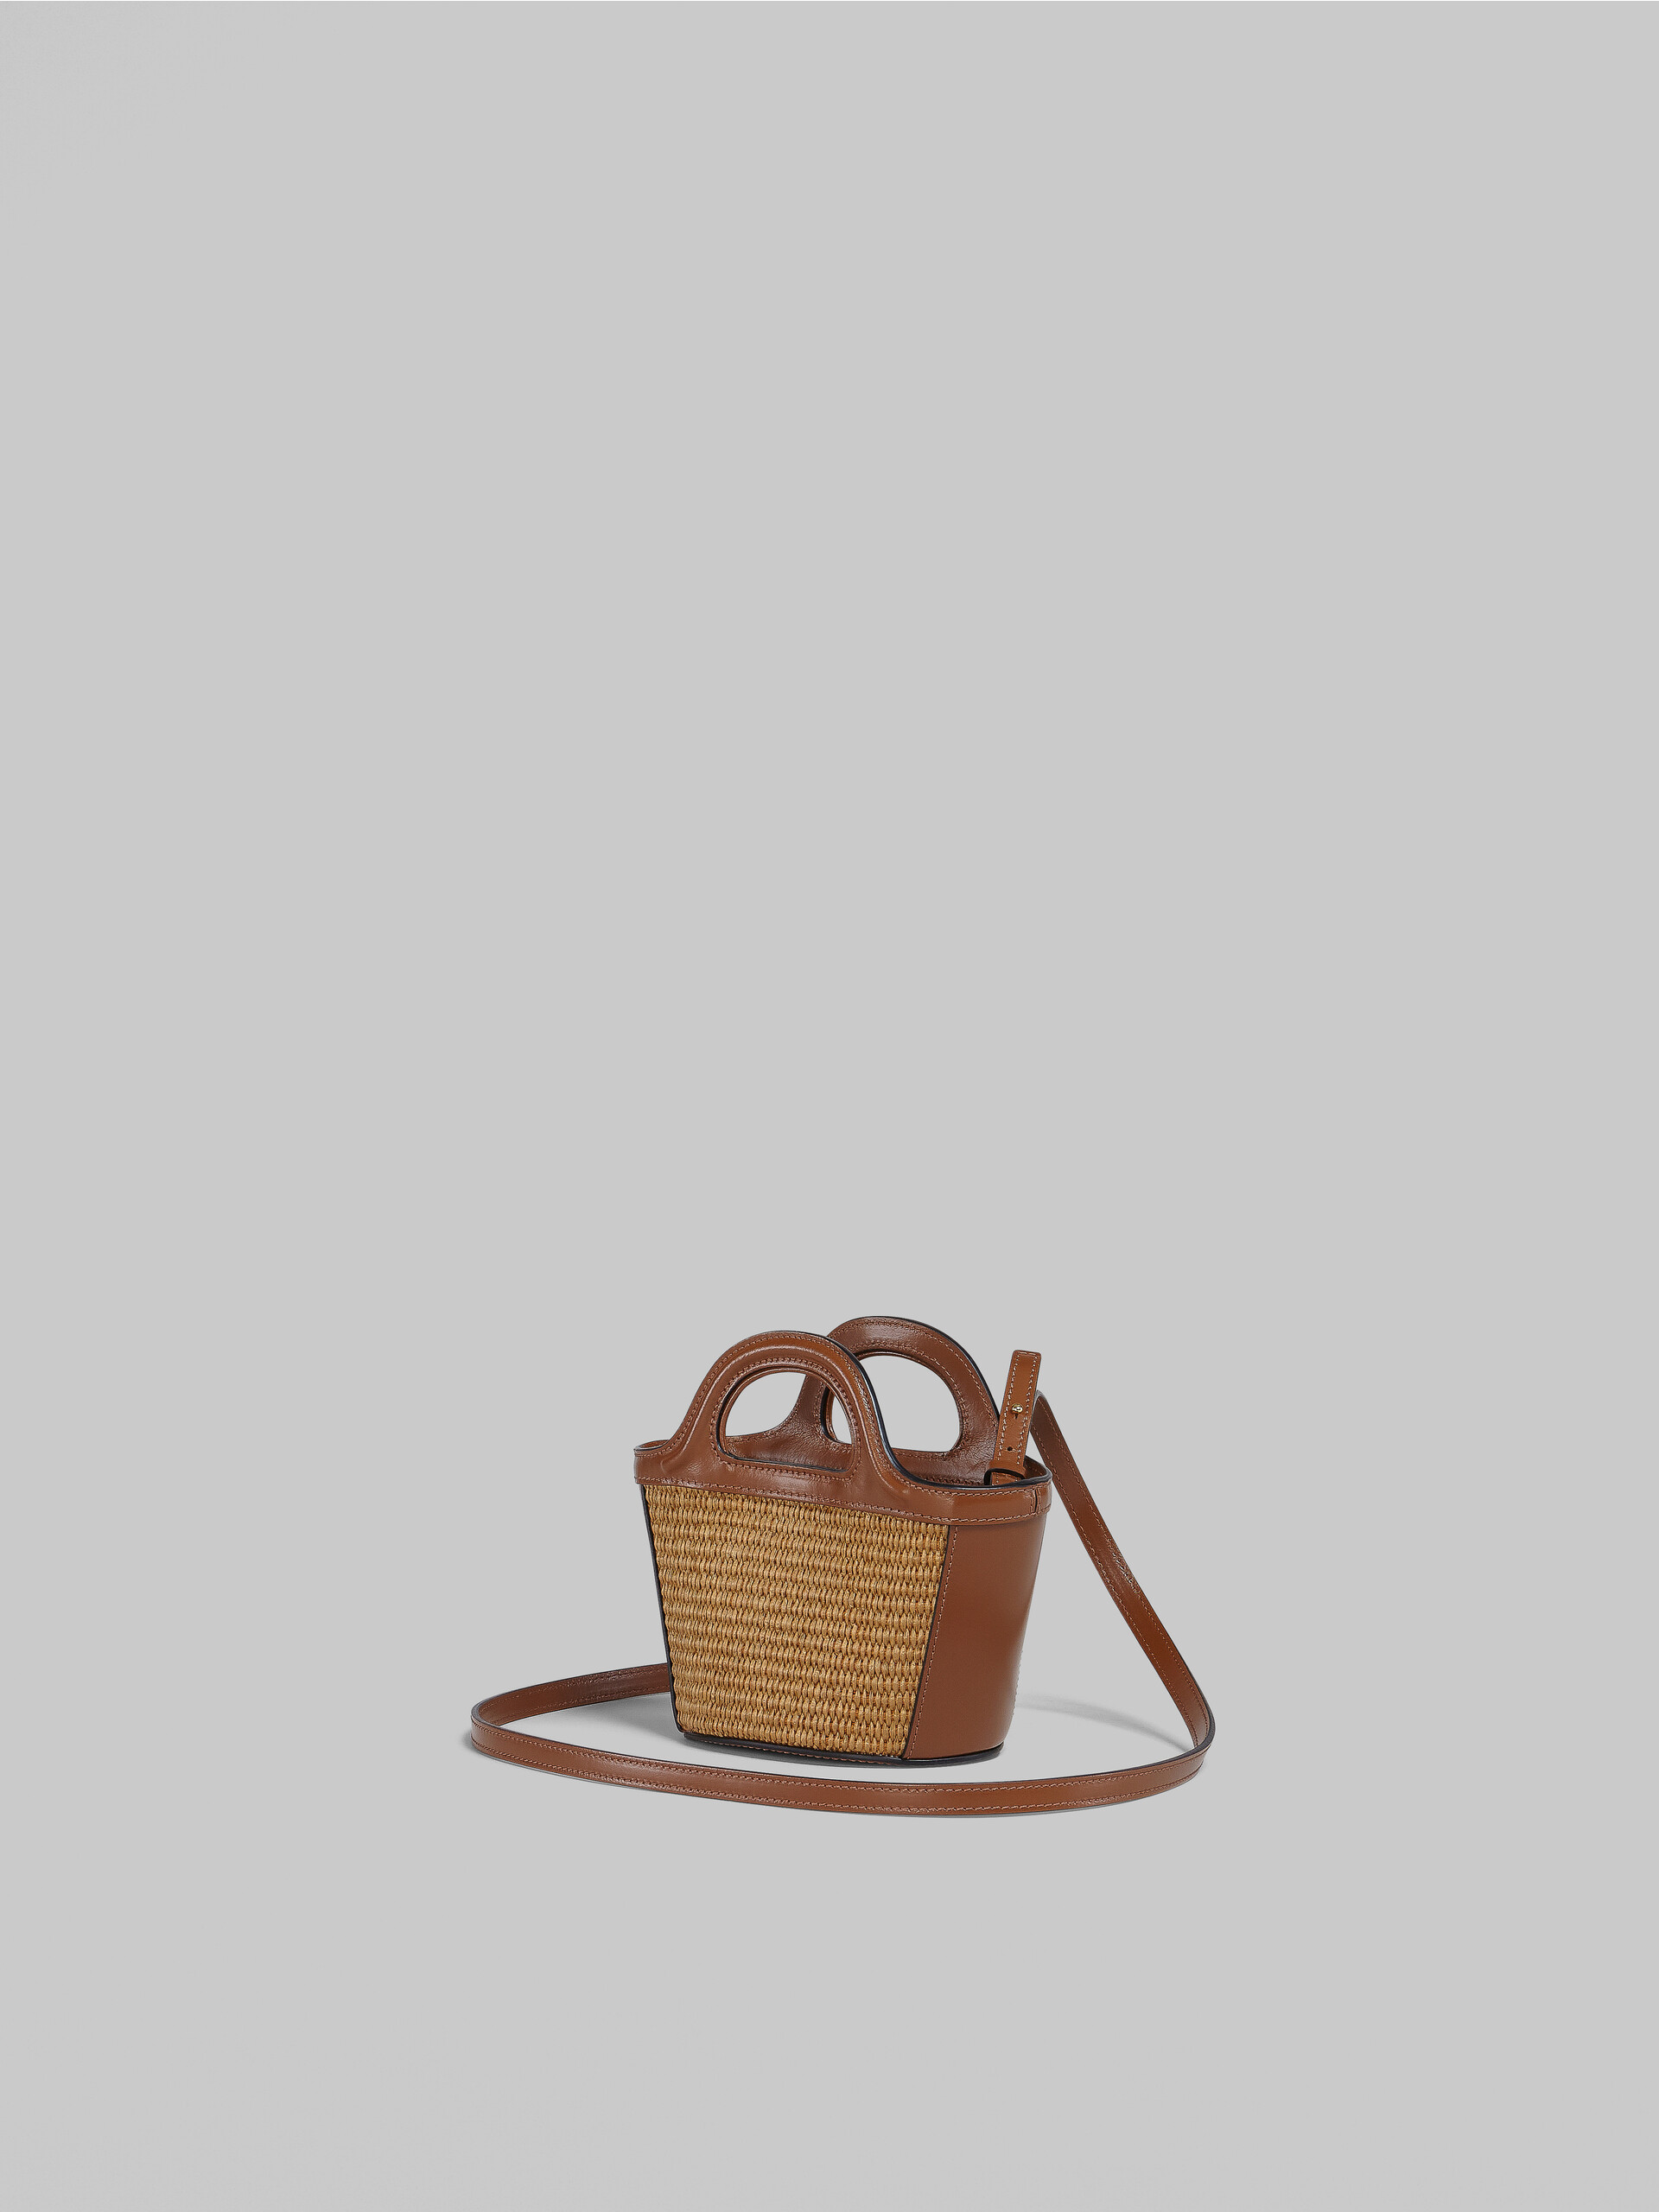 Tropicalia Micro Bag in brown leather and raffia-effect fabric